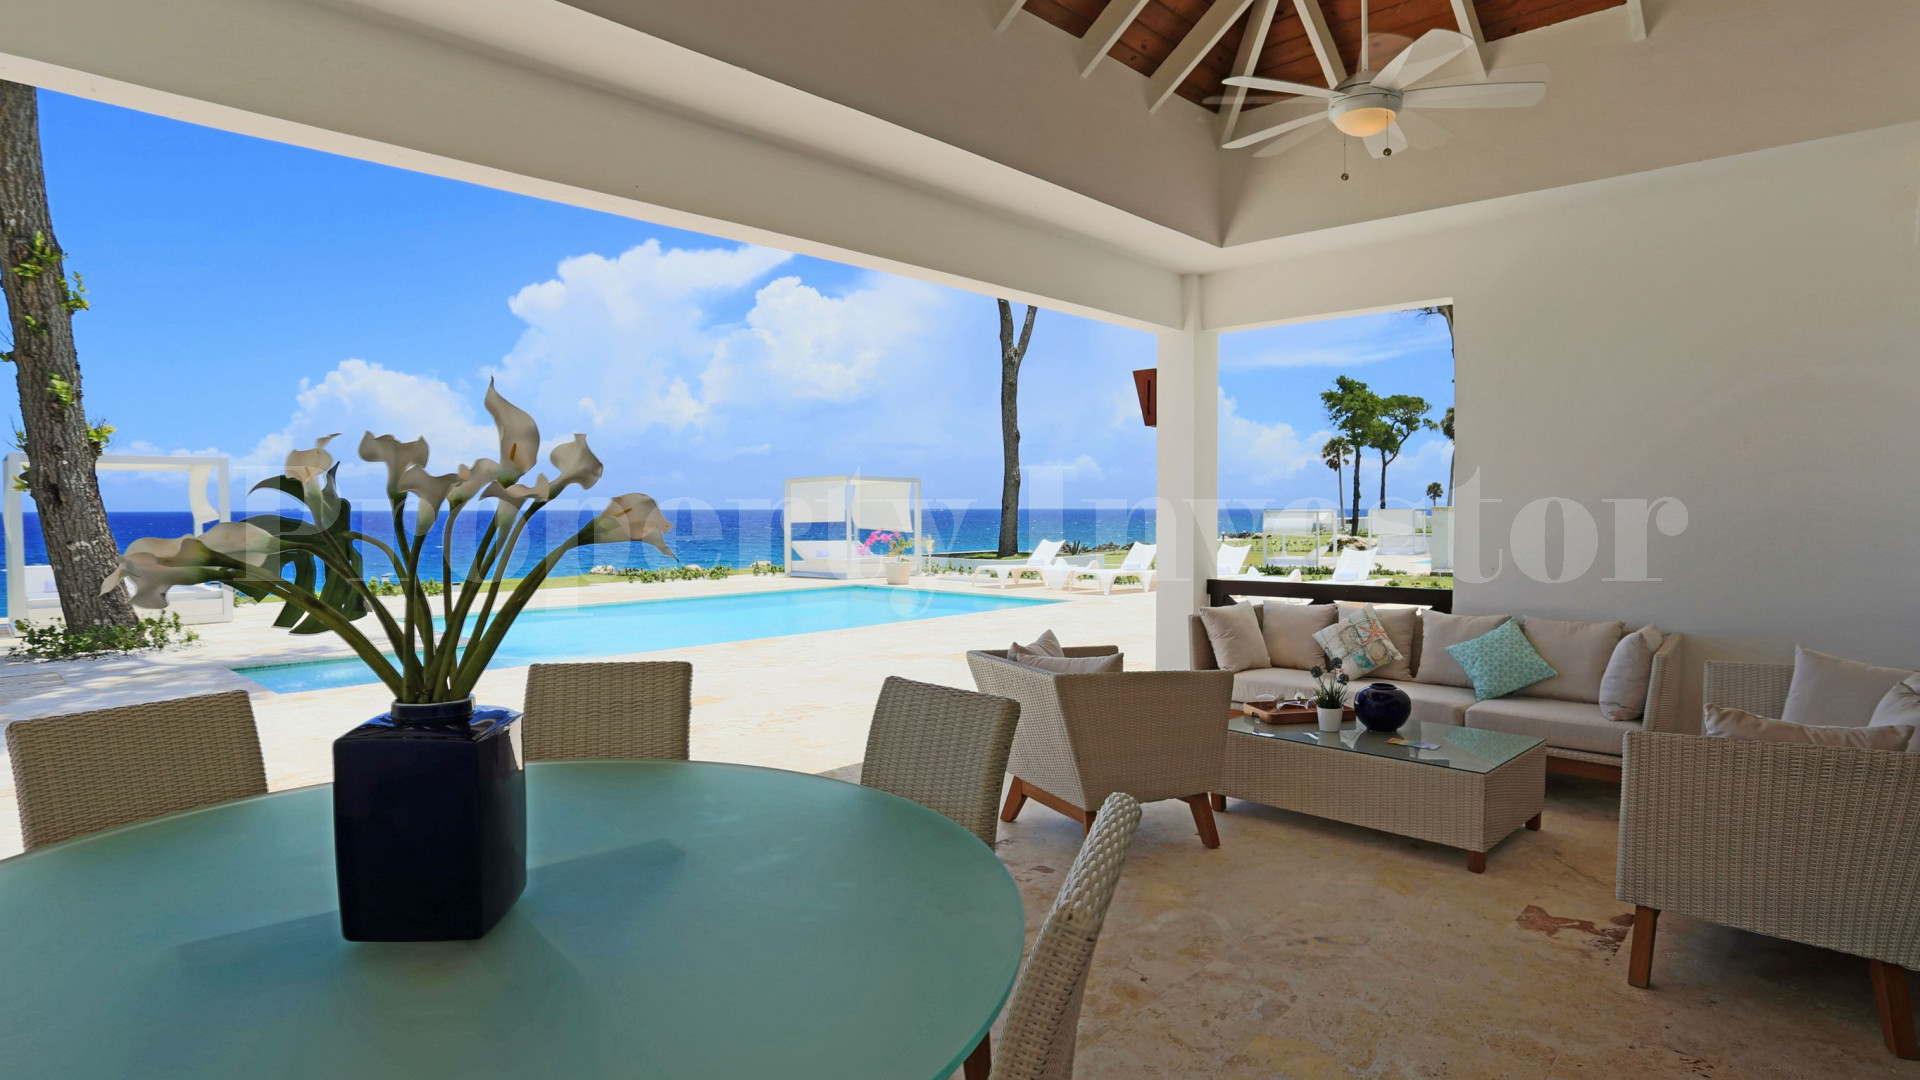 3 Bedroom Oceanfront Villa in the Dominican Republic with 30 Year Financing (Villa 2)